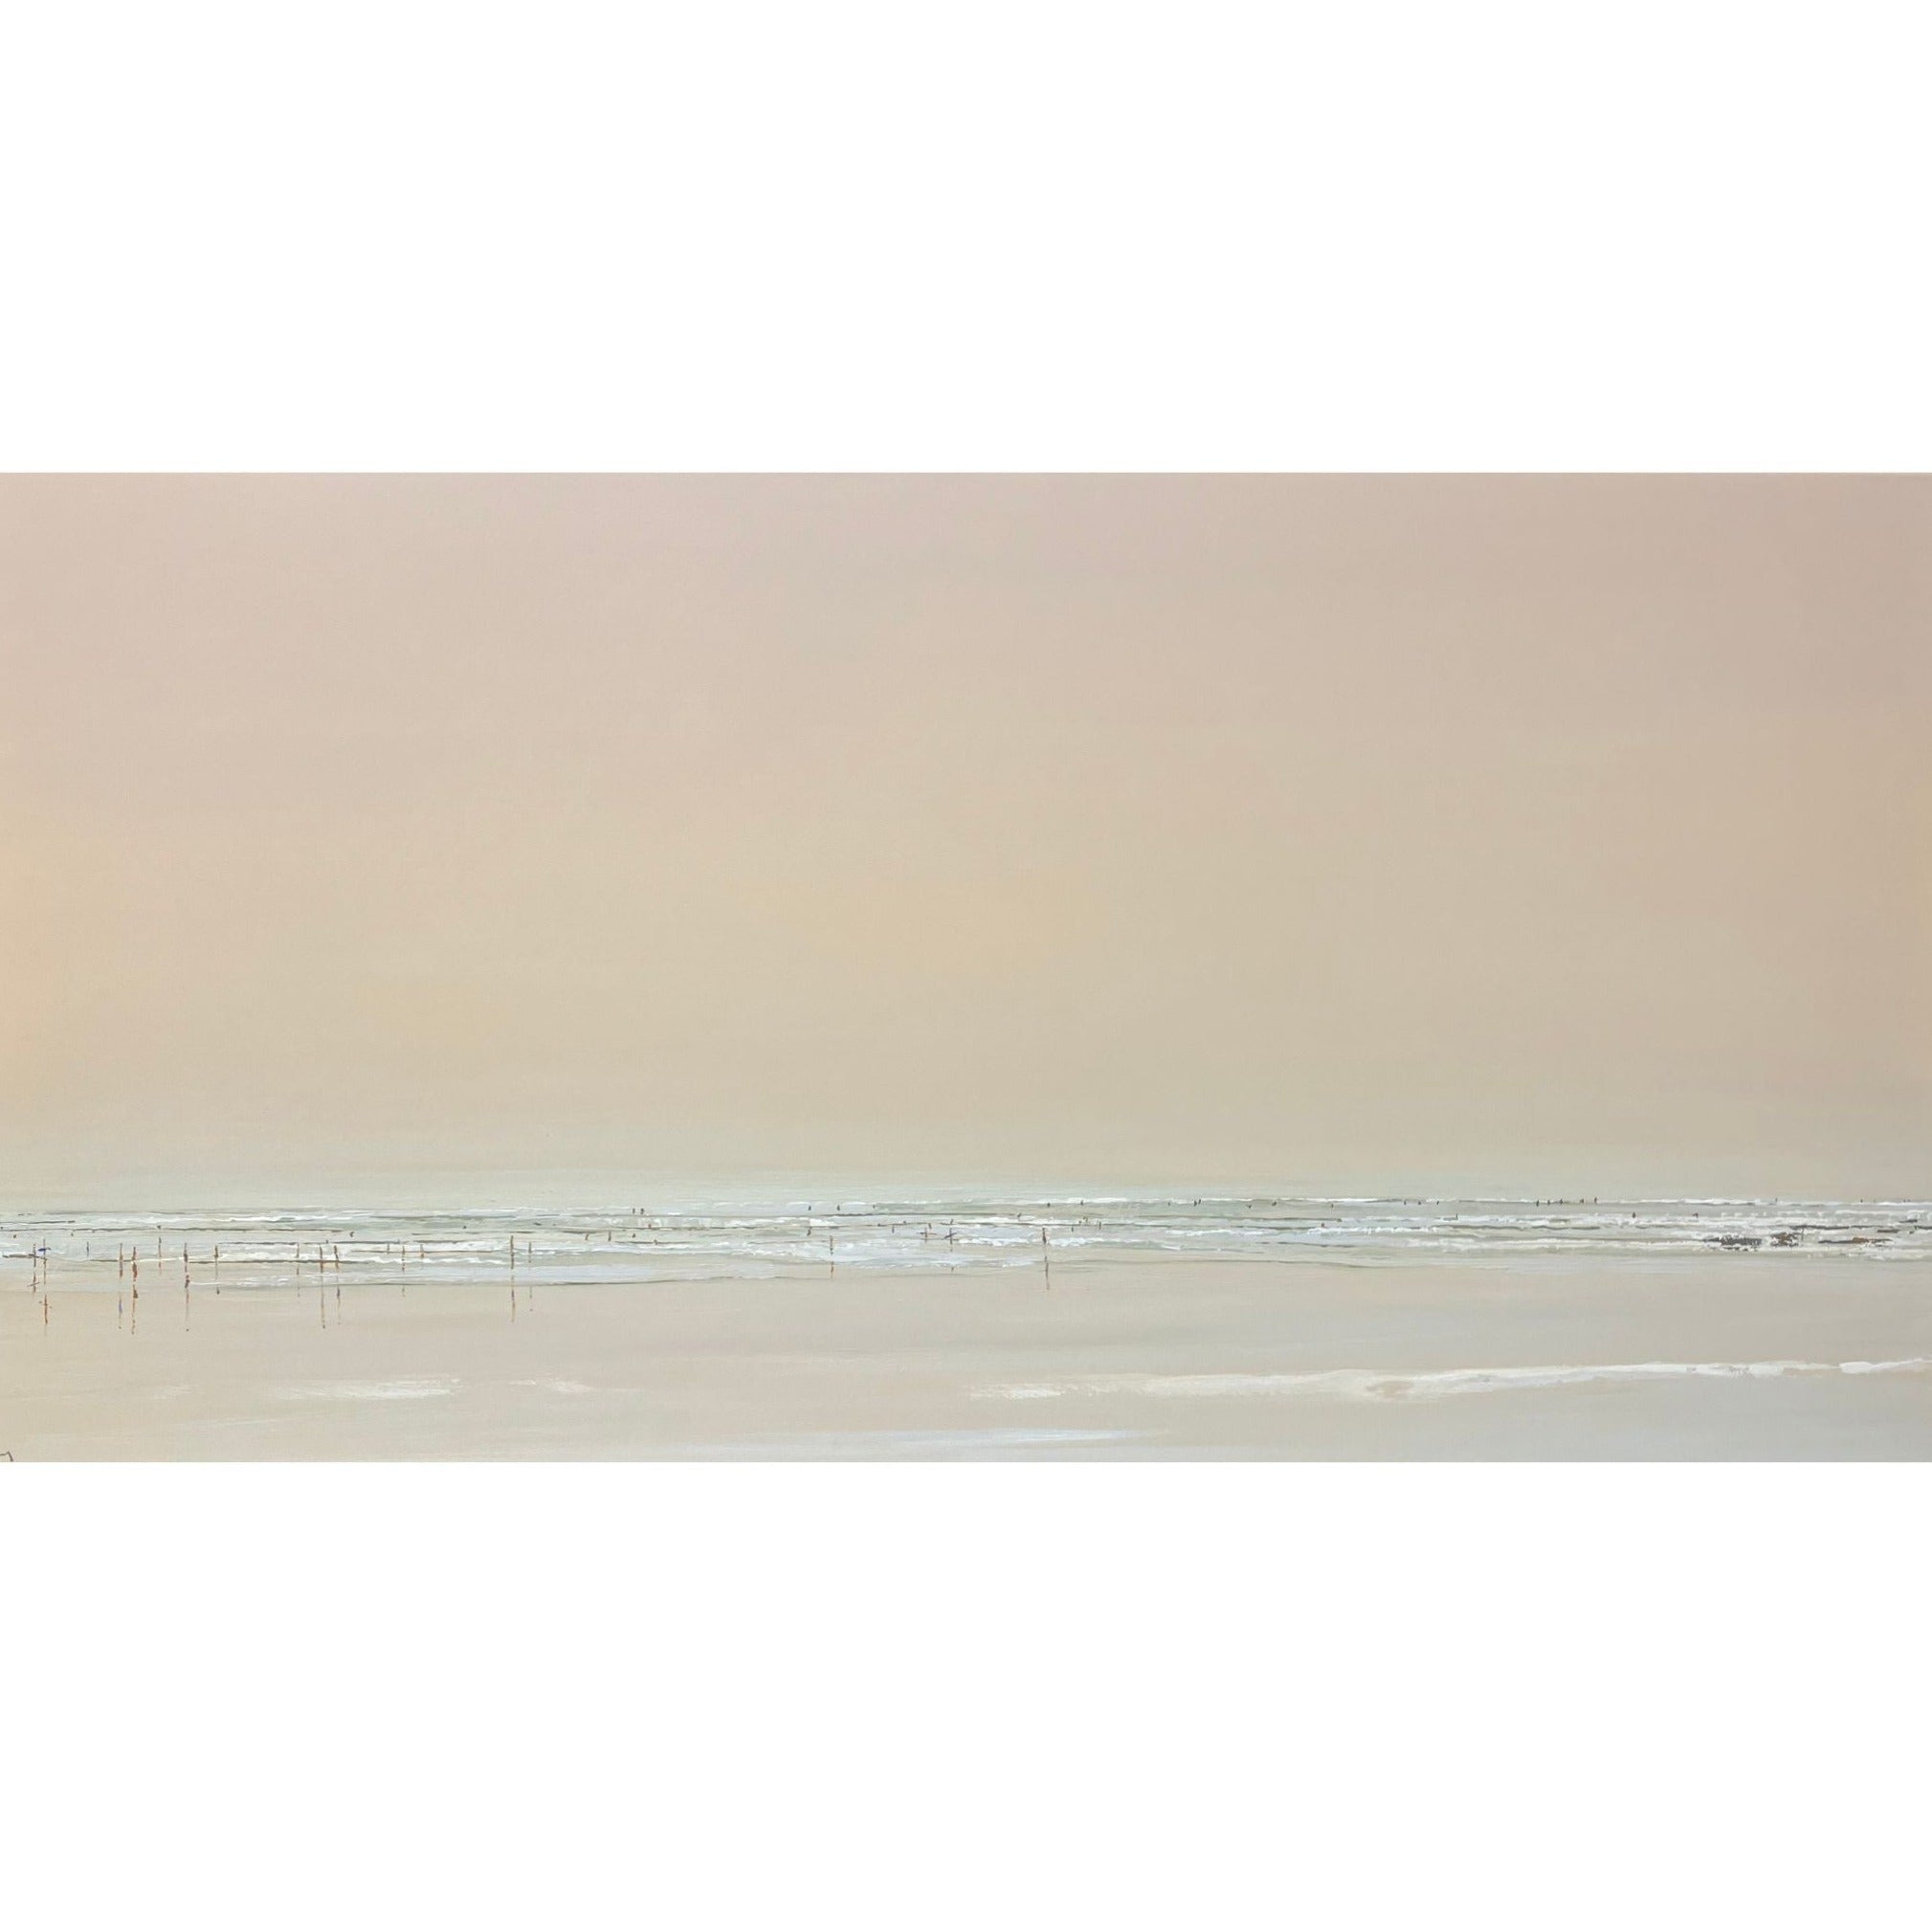 Early Morning Surf by Thom Kadera